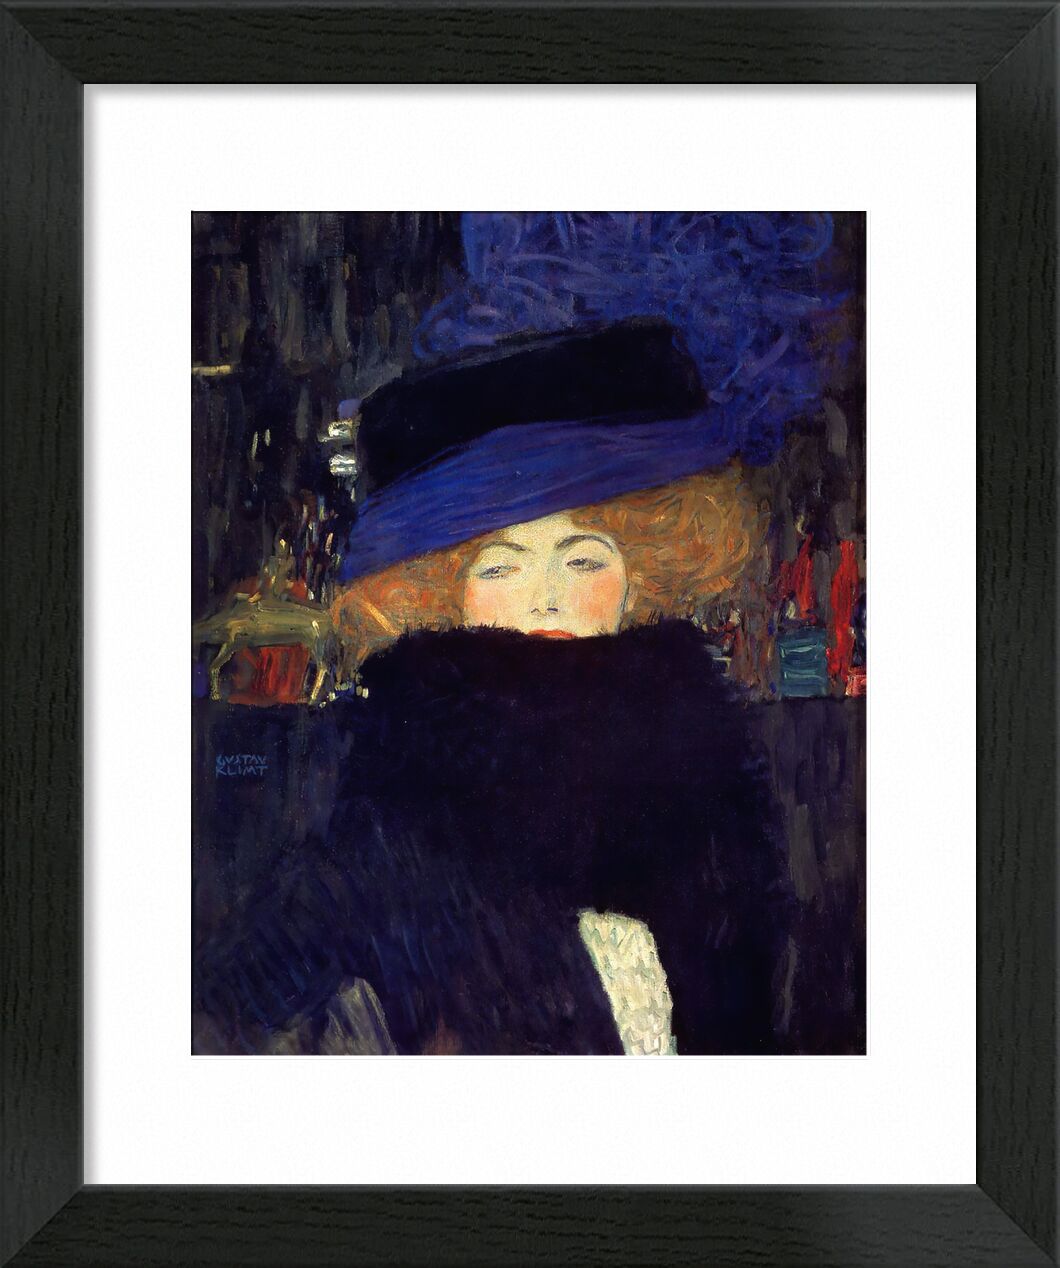 Lady with a Hat and a Feather Boa - Gustav Klimt desde Bellas artes, Prodi Art, noche, ciudad, pelirrojo, plumas, abrigo, mujer, KLIMT